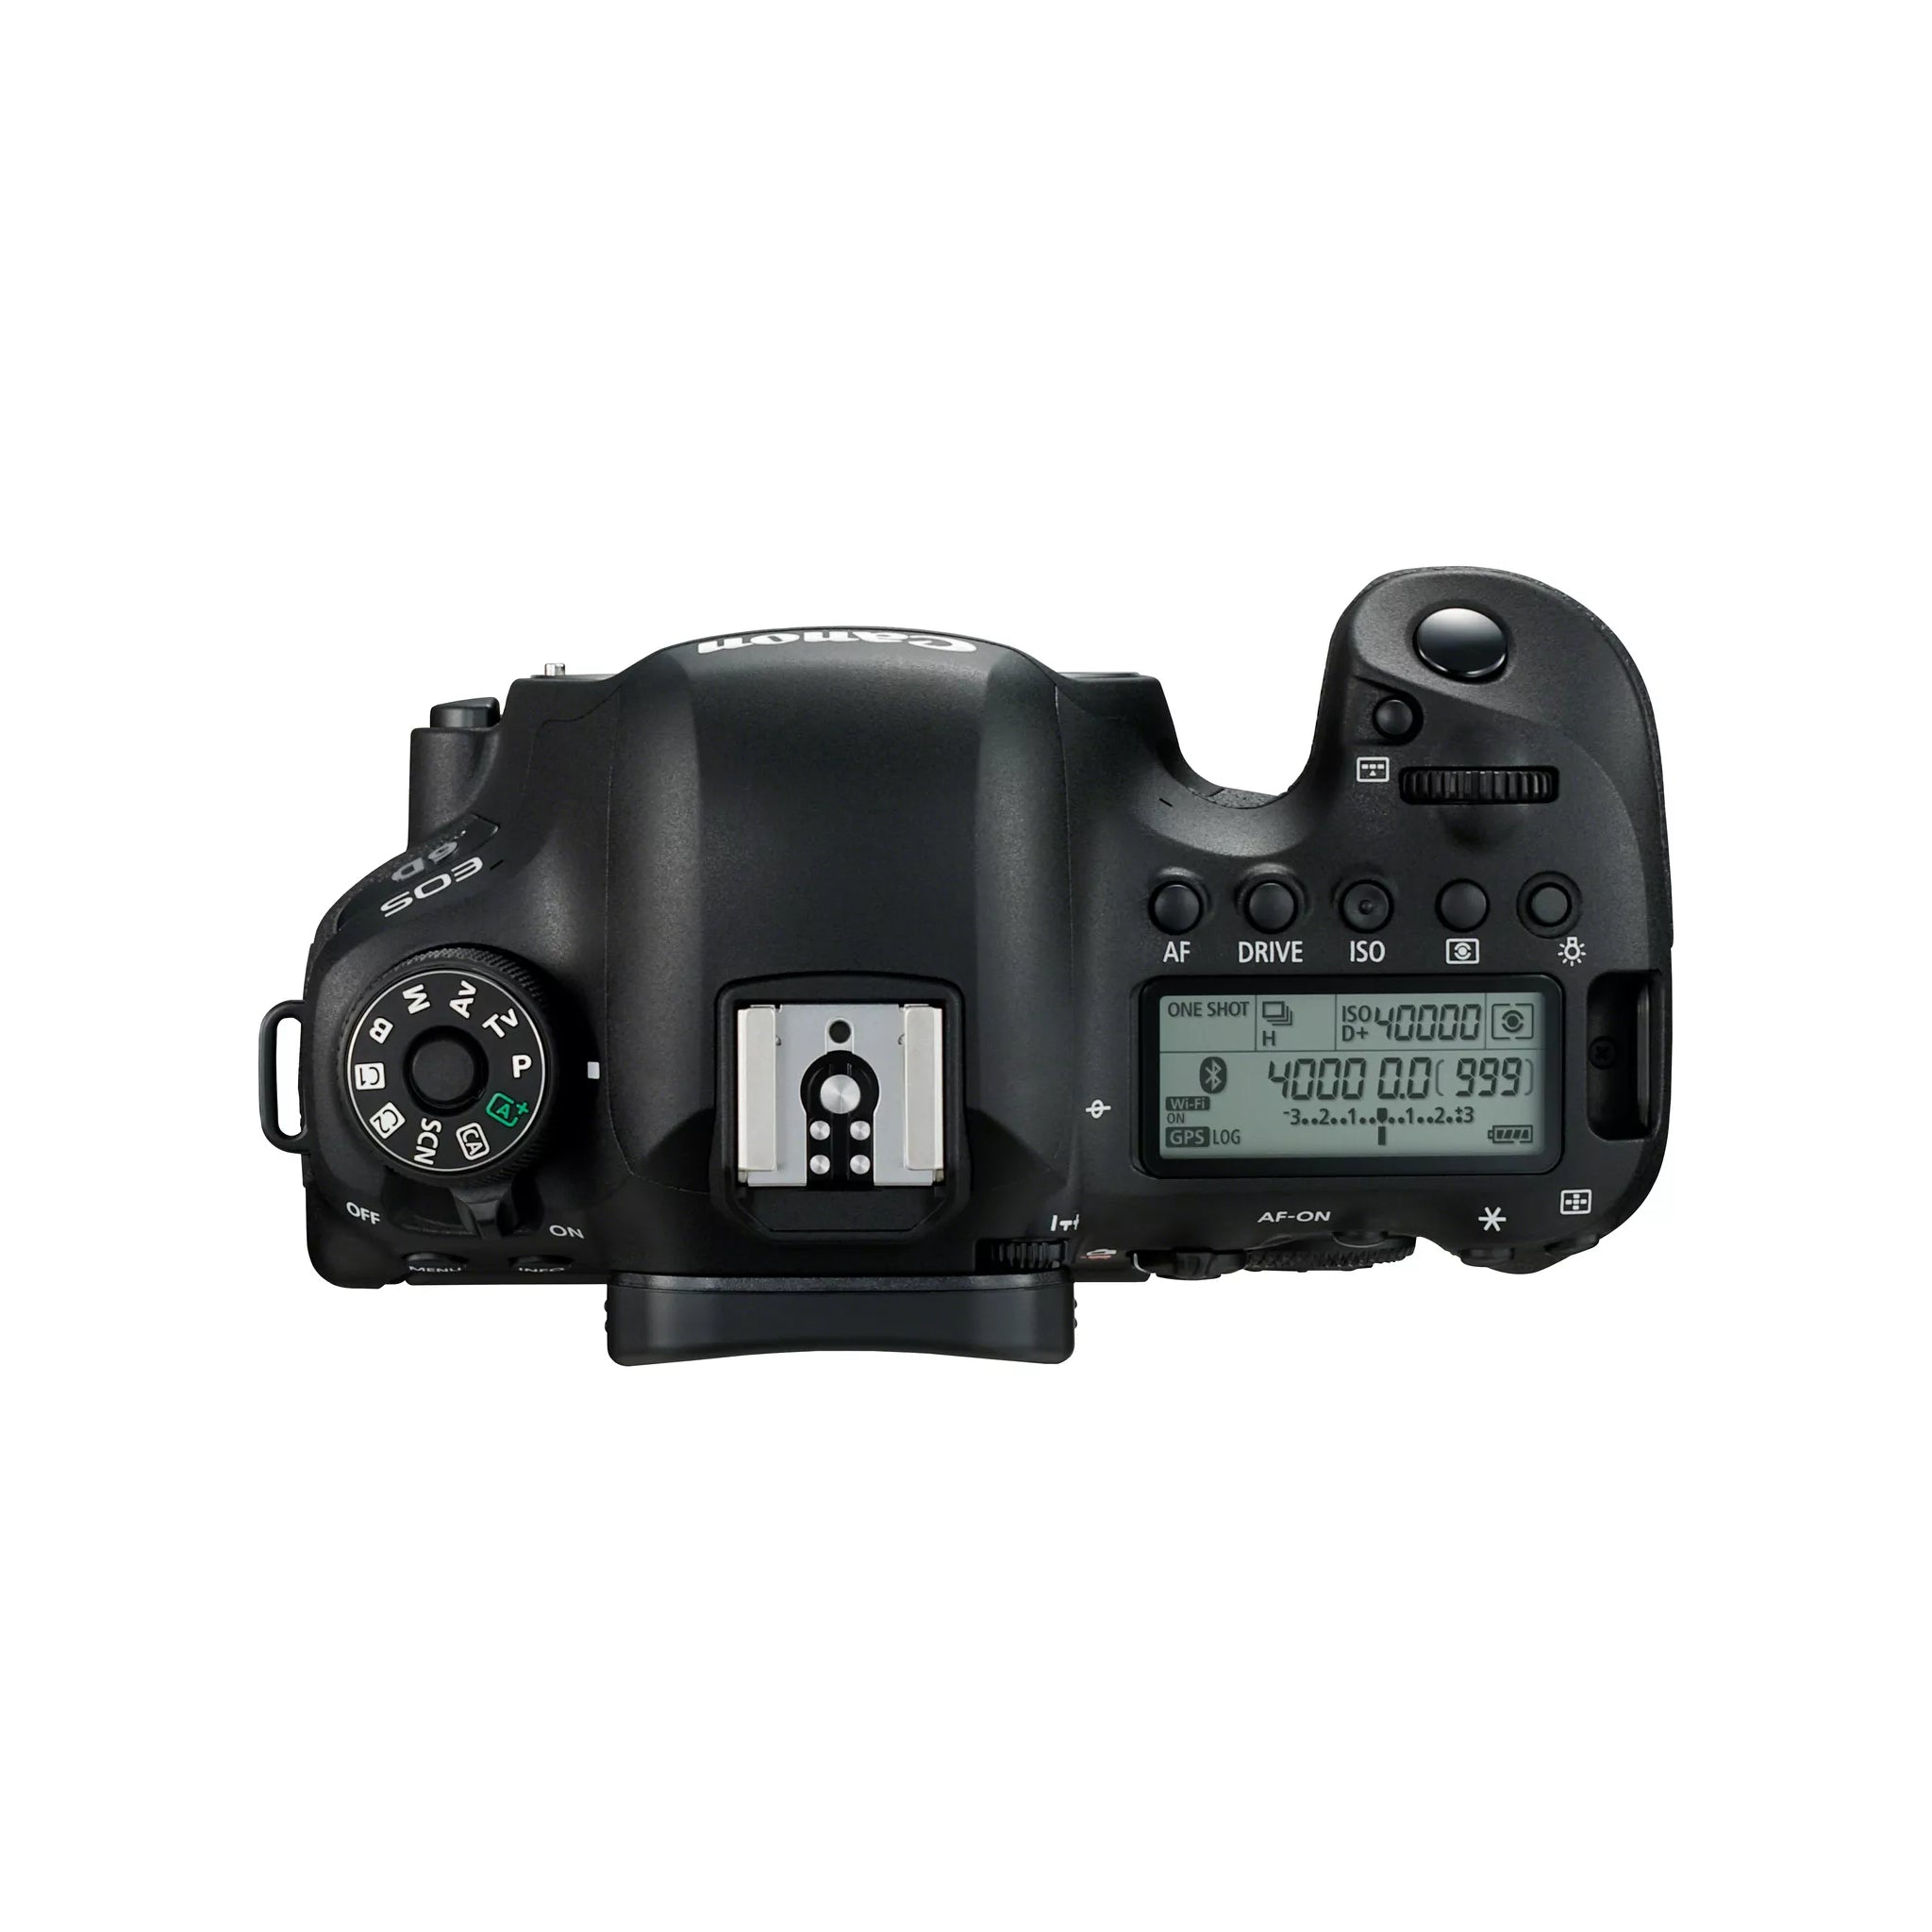 Canon EOS 6D mk ii  Dslr Camera (Body Only)